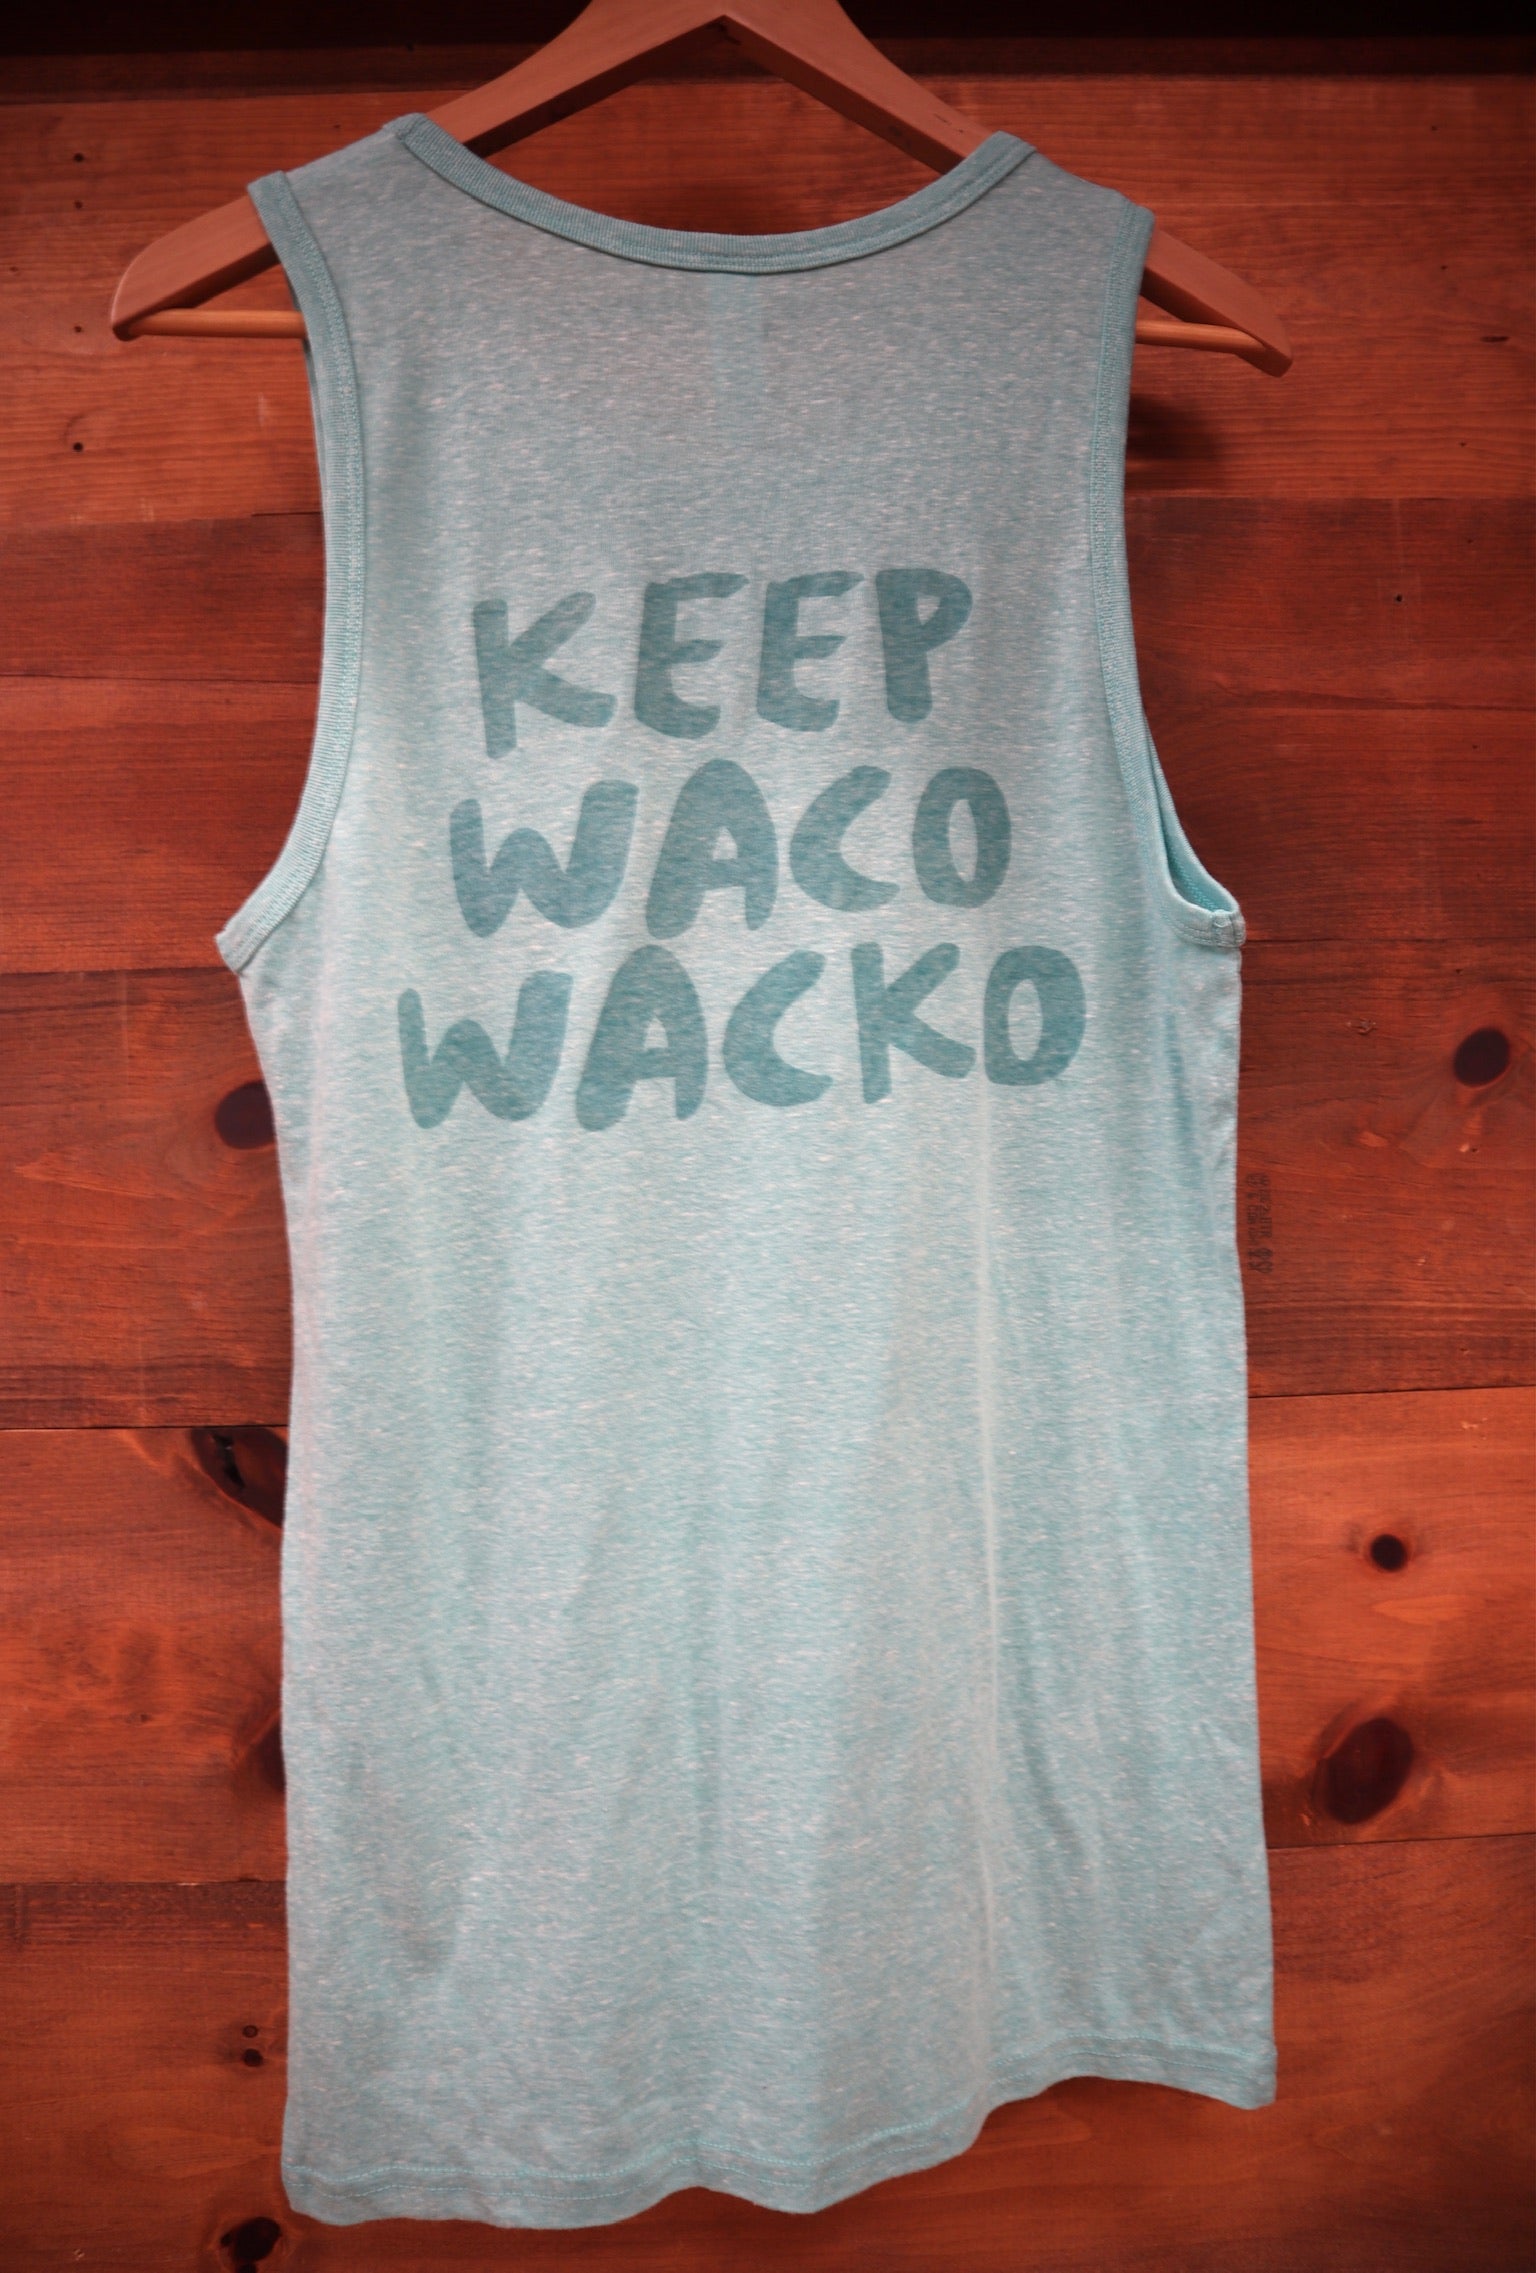 Bear Mountain Keep Waco Wacko Tank